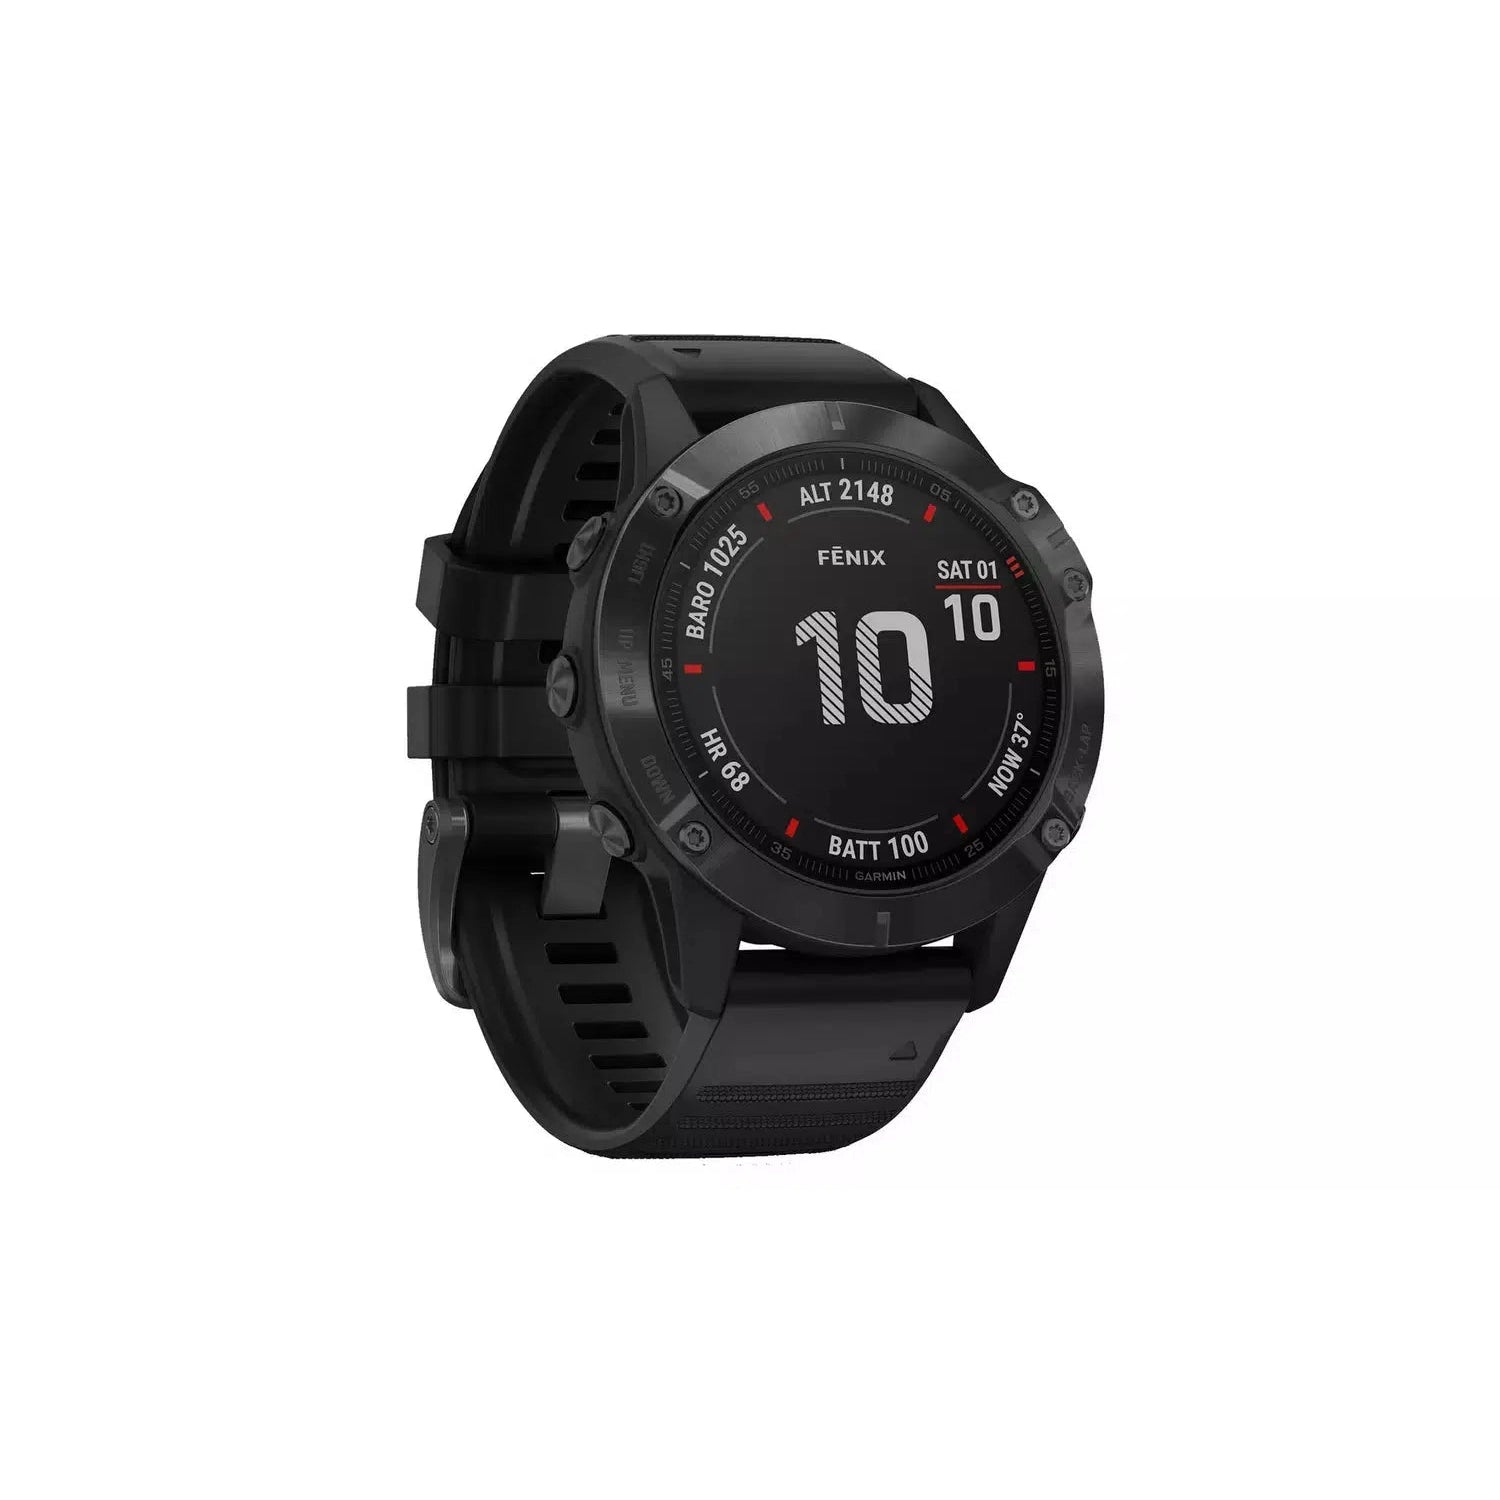 Garmin Fenix 6 Pro GPS Smart Watch - Black - Refurbished Excellent